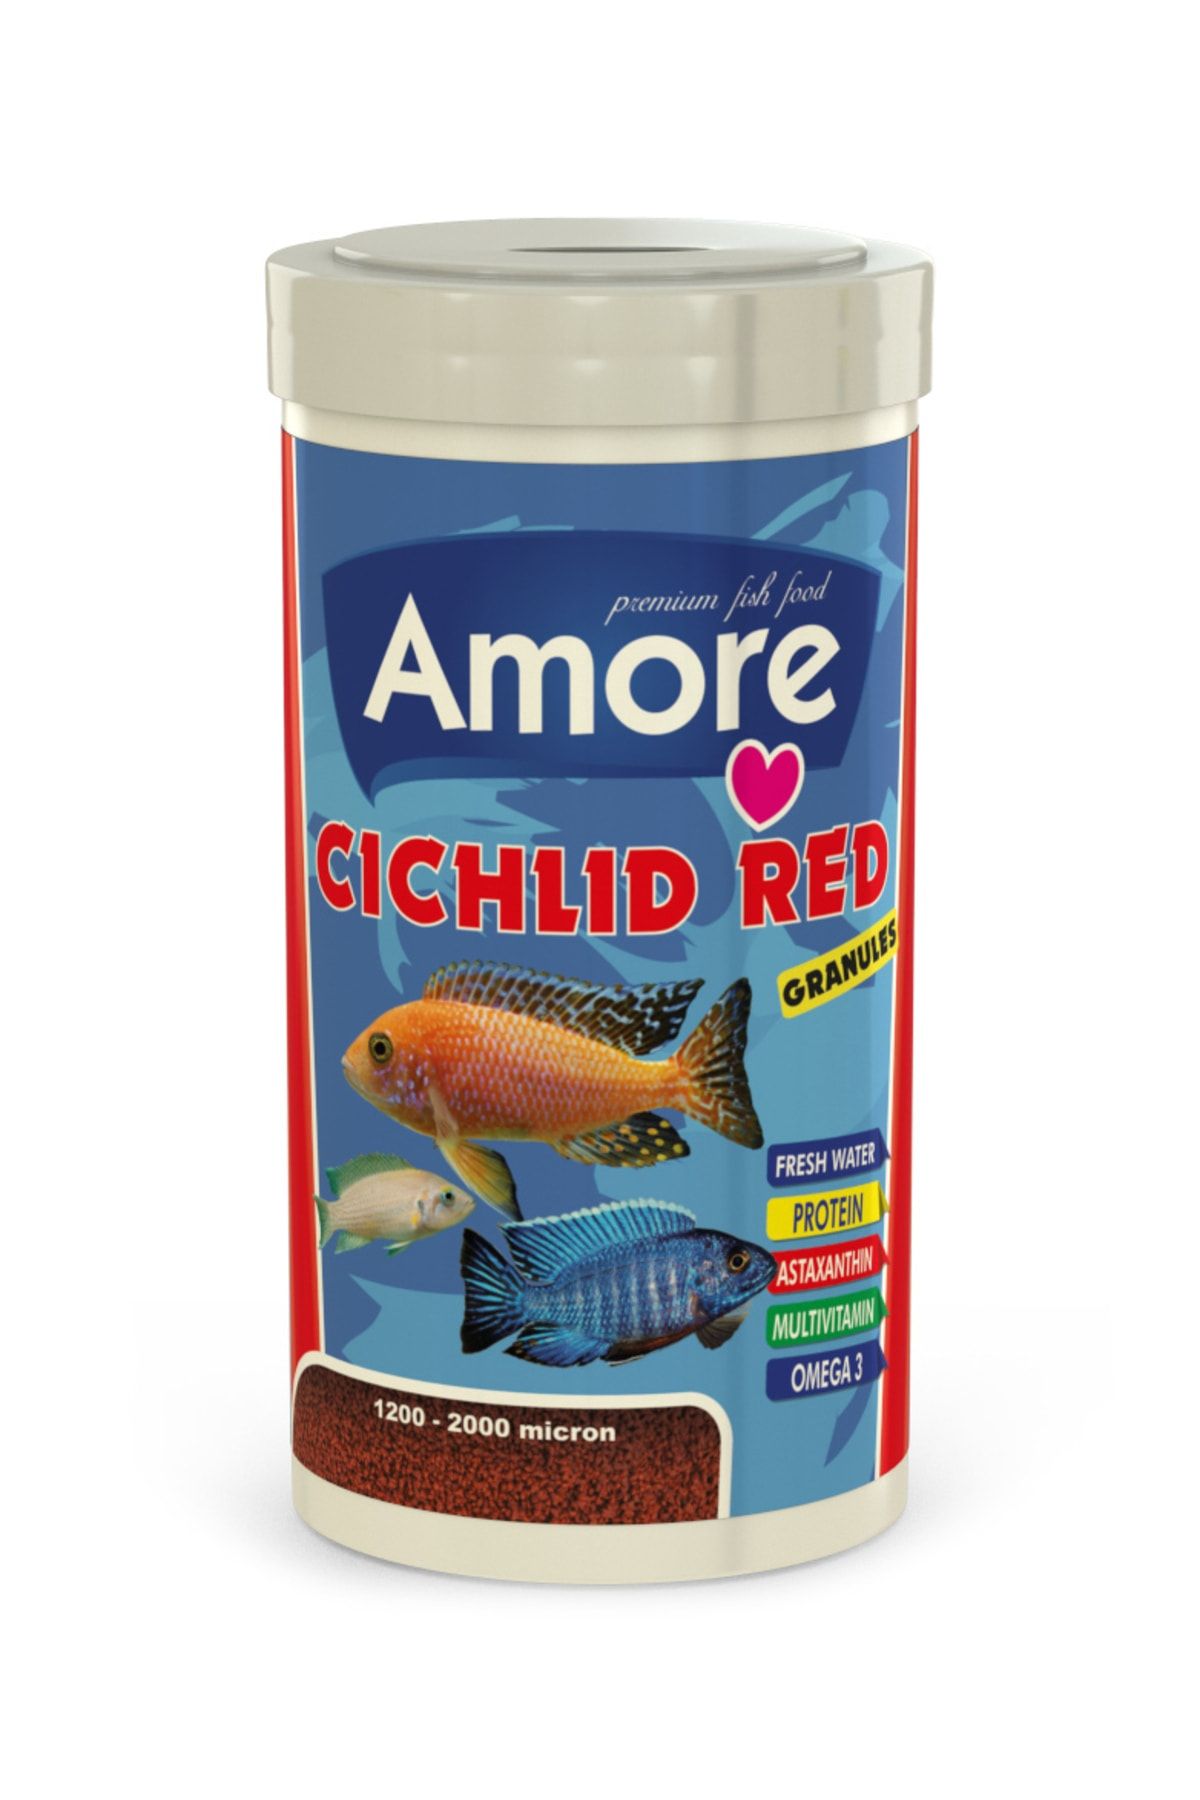 Amore Cichlid Mix Granules 1 Lt, Ciklet Red Granulat 1 Lt Kutu Balik Yemi ve Vitamin, Clear Su Duzenleyici